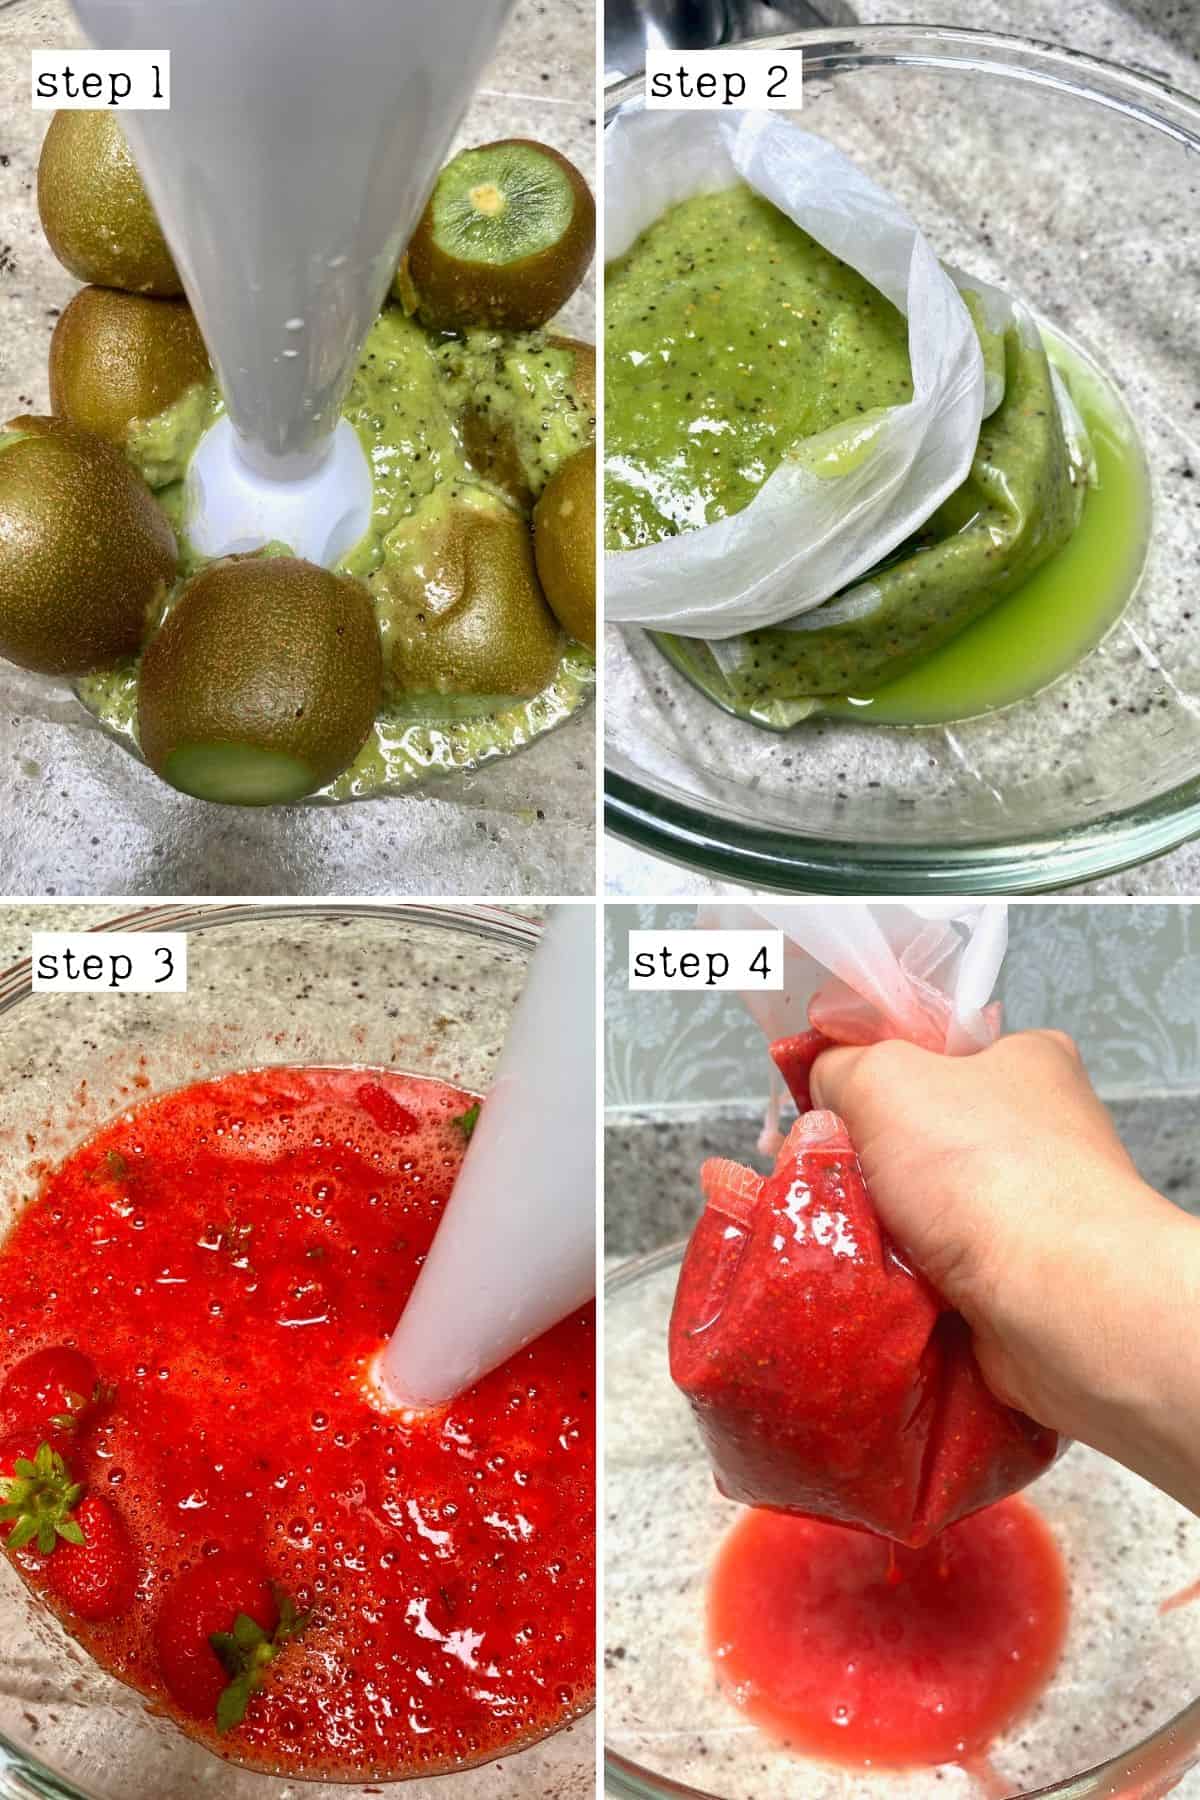 Steps for making strawberry kiwi juice